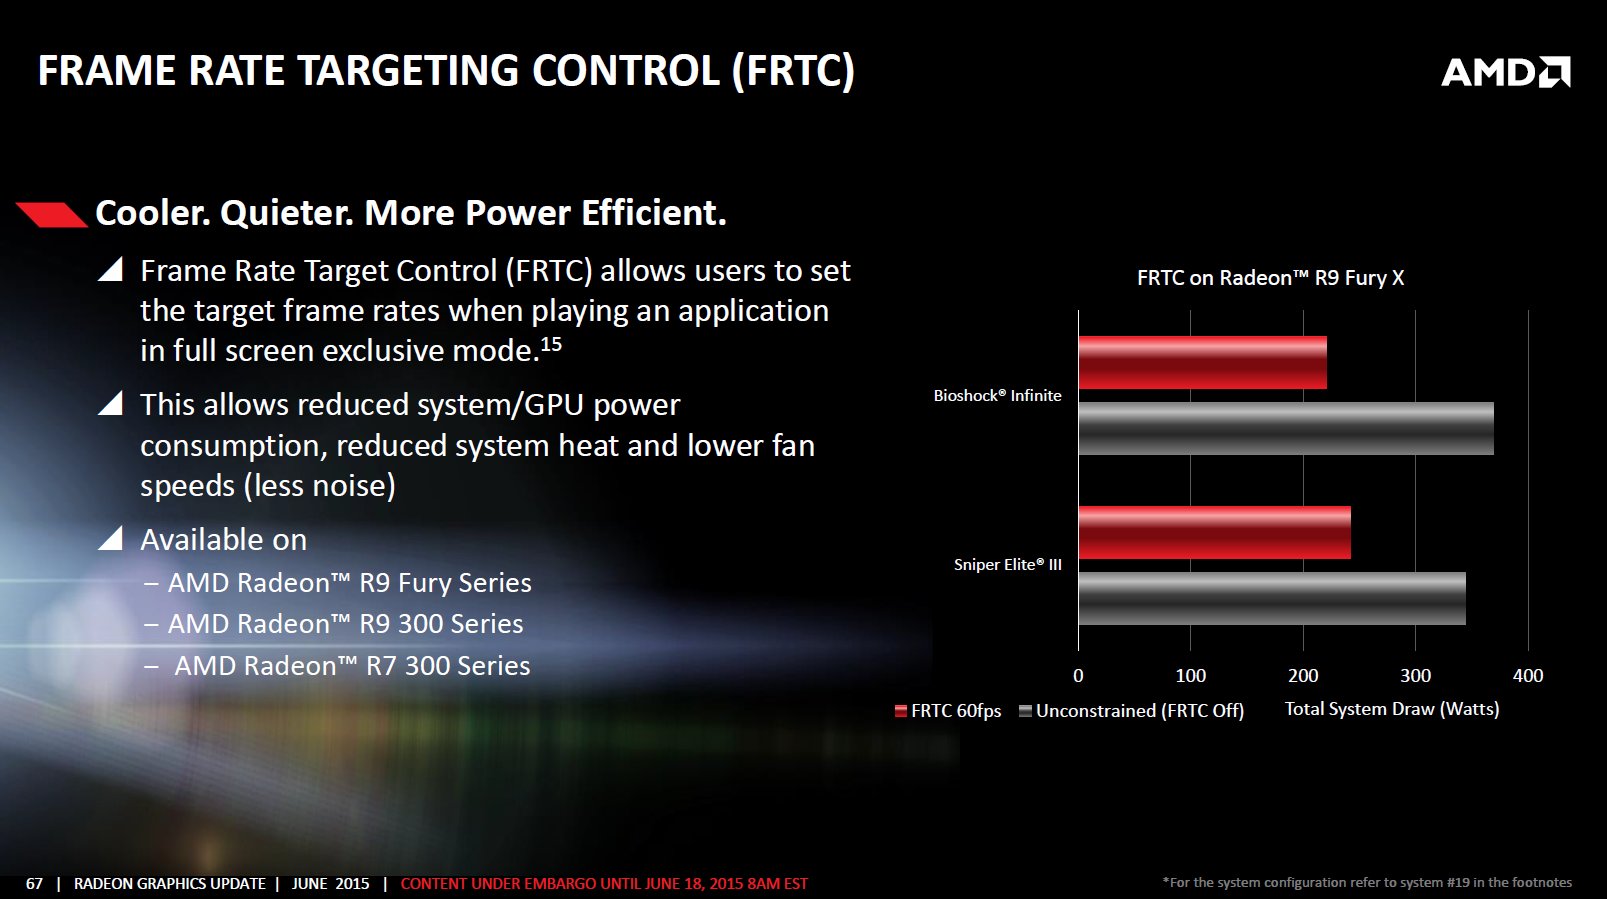 AMDs Frame Rate Target Control